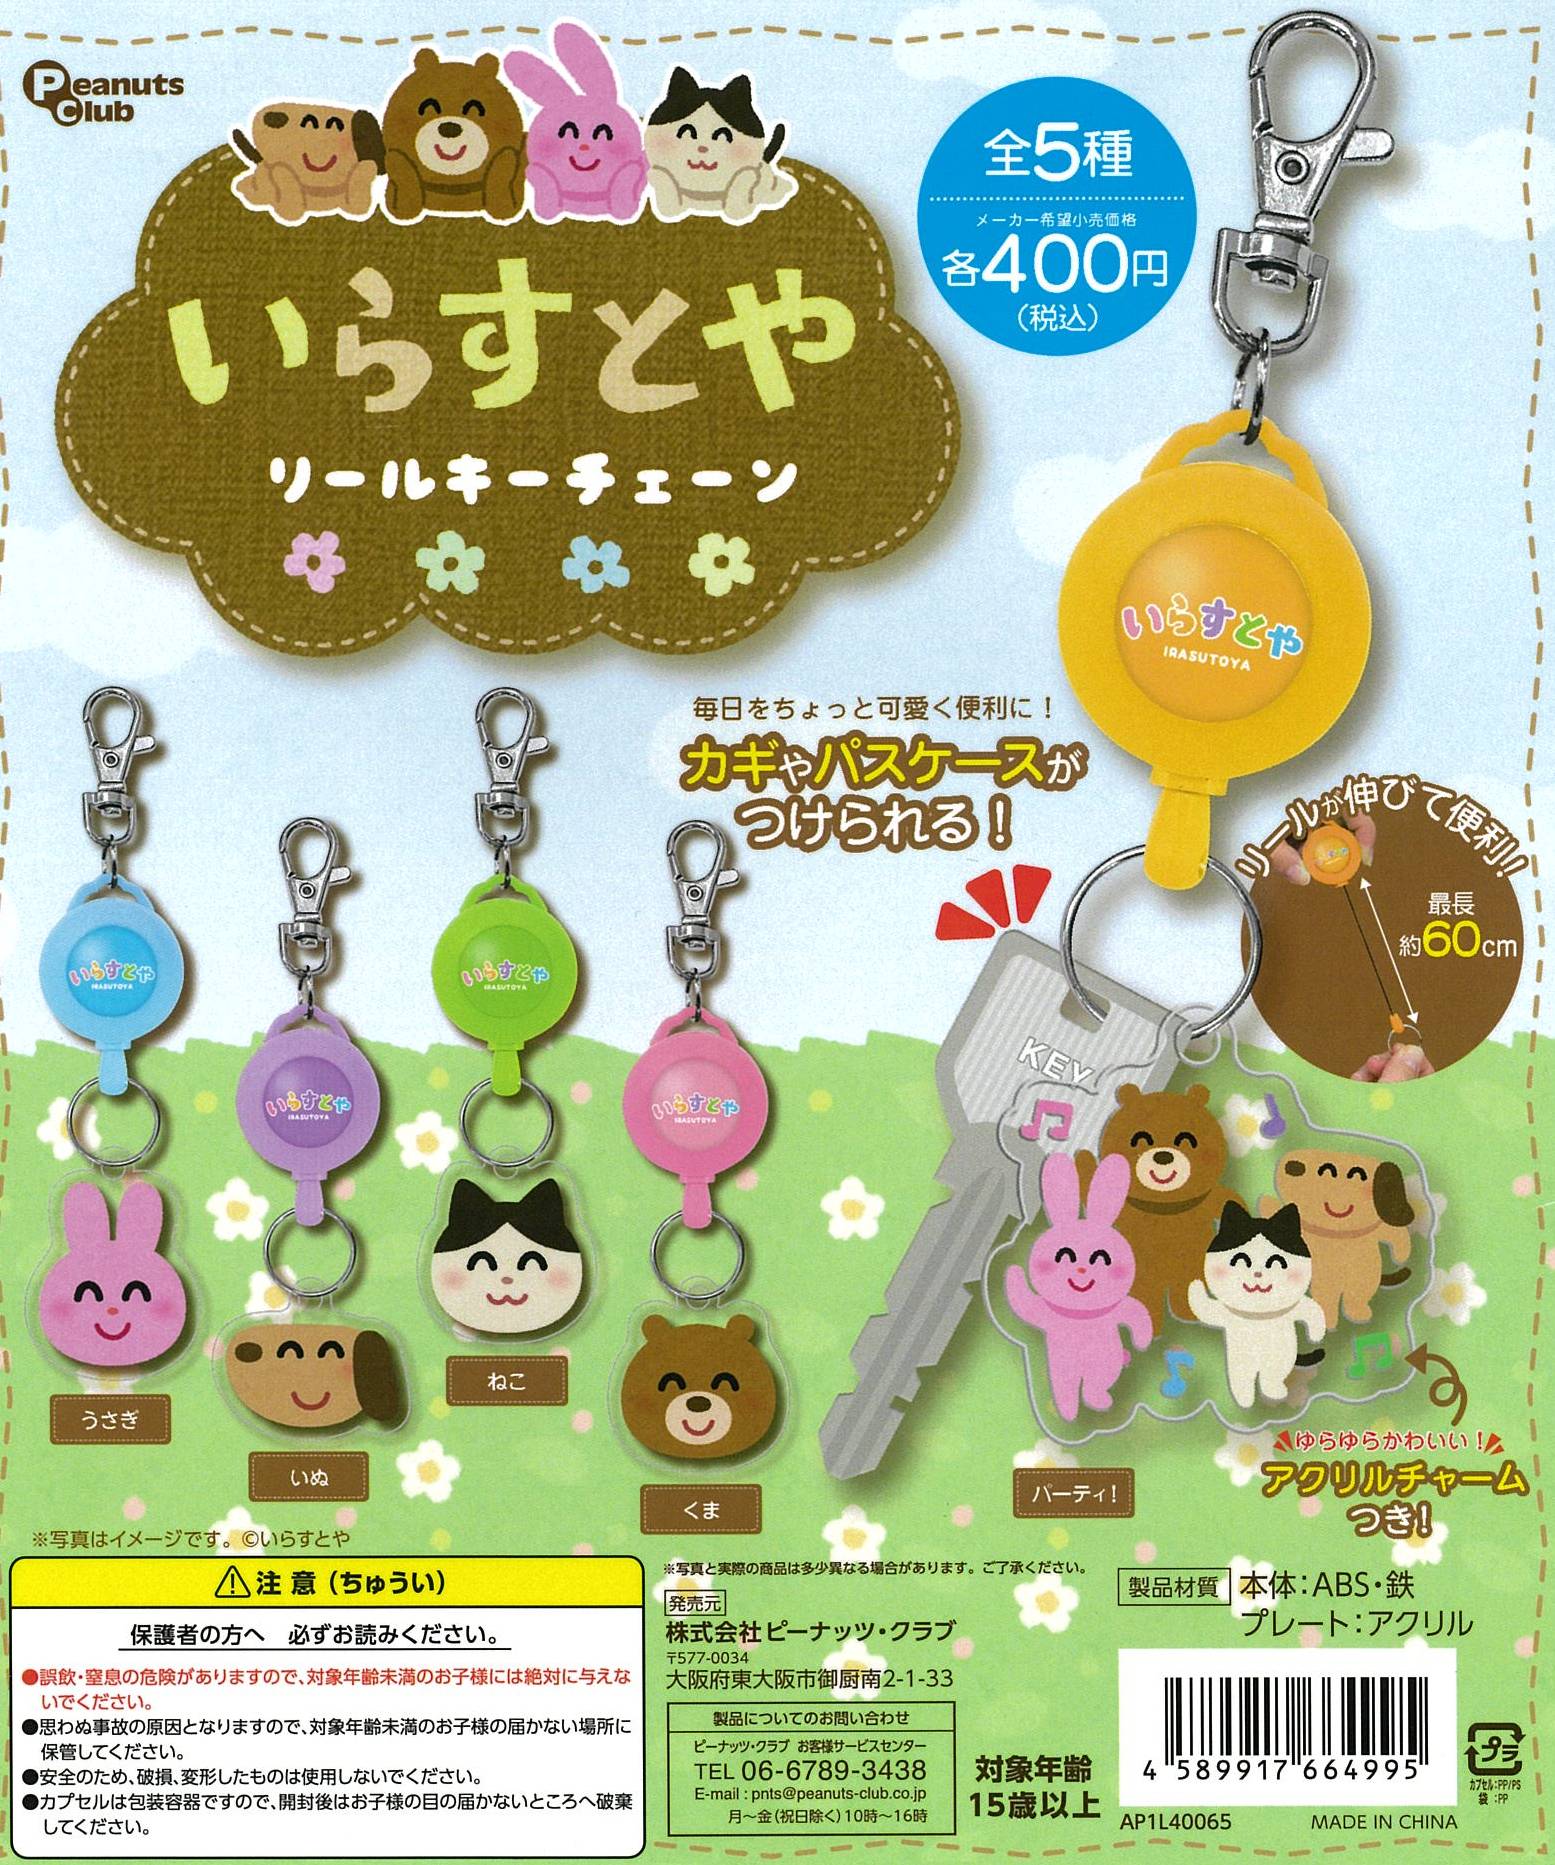 CP2554 Irasutoya Reel Key Chain